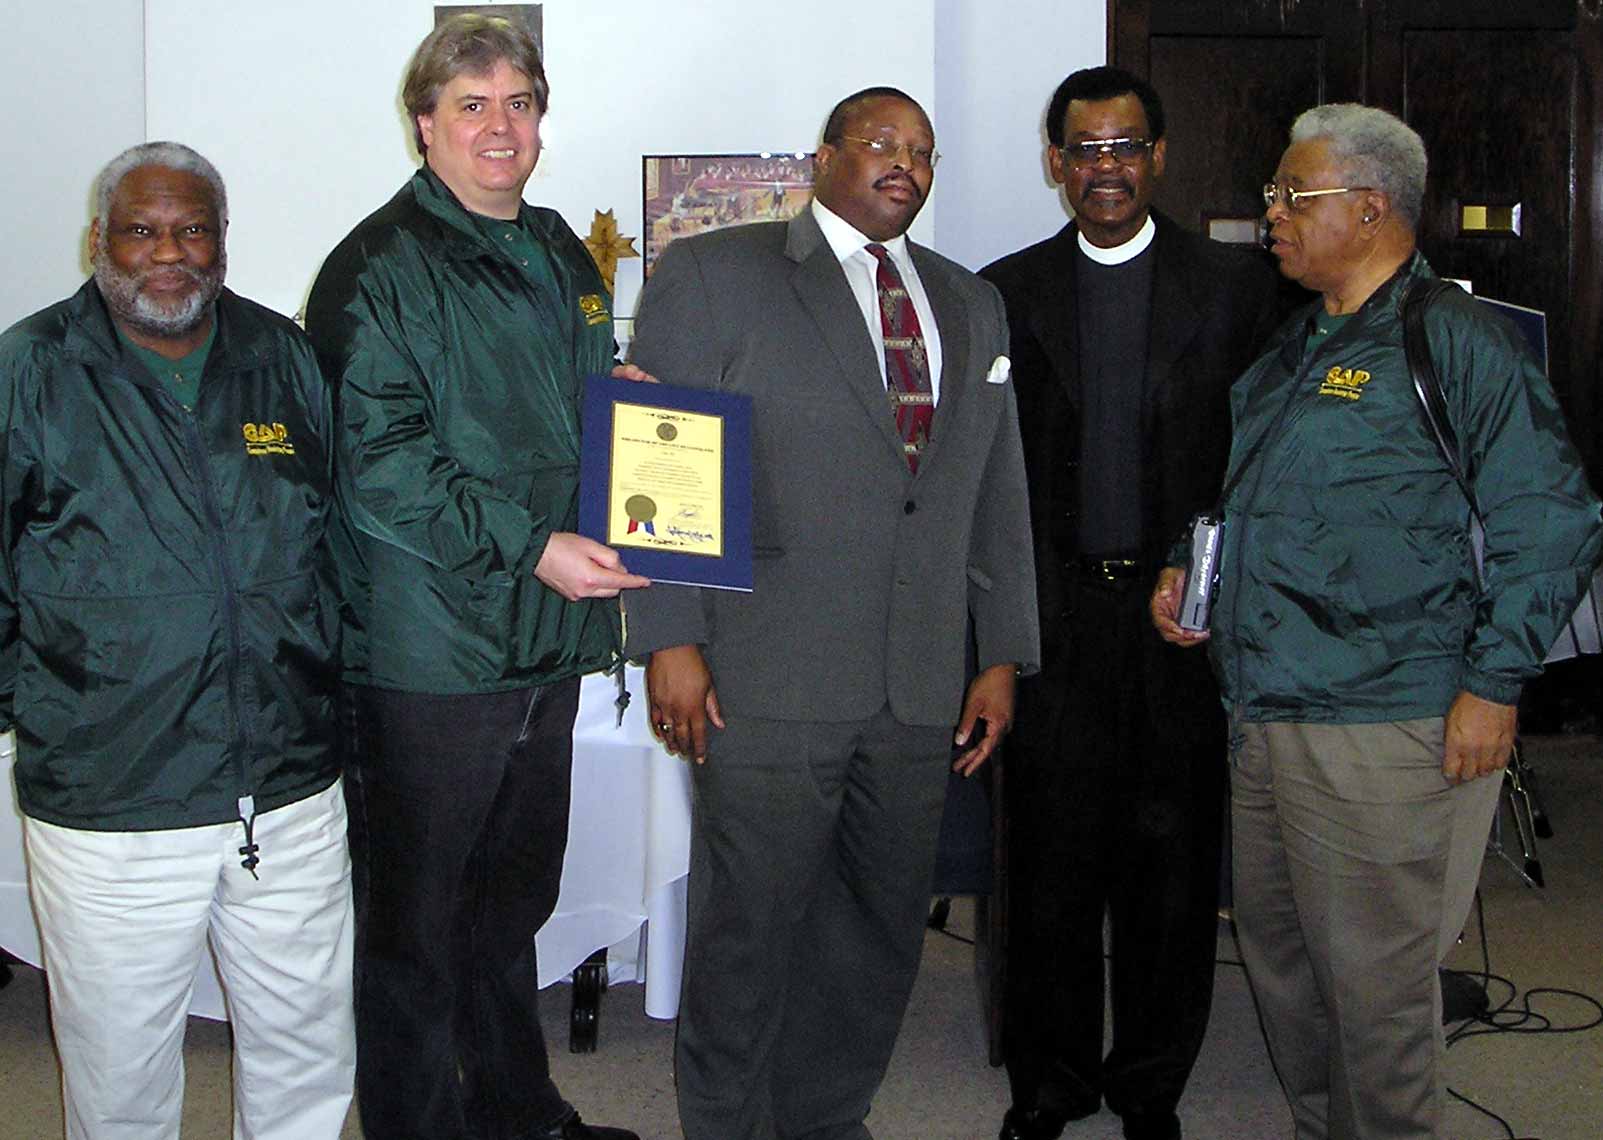 CAP's Arthur Phelps, Dan Hanson and Dan Davenport with Councilman White and Elder Whittiker